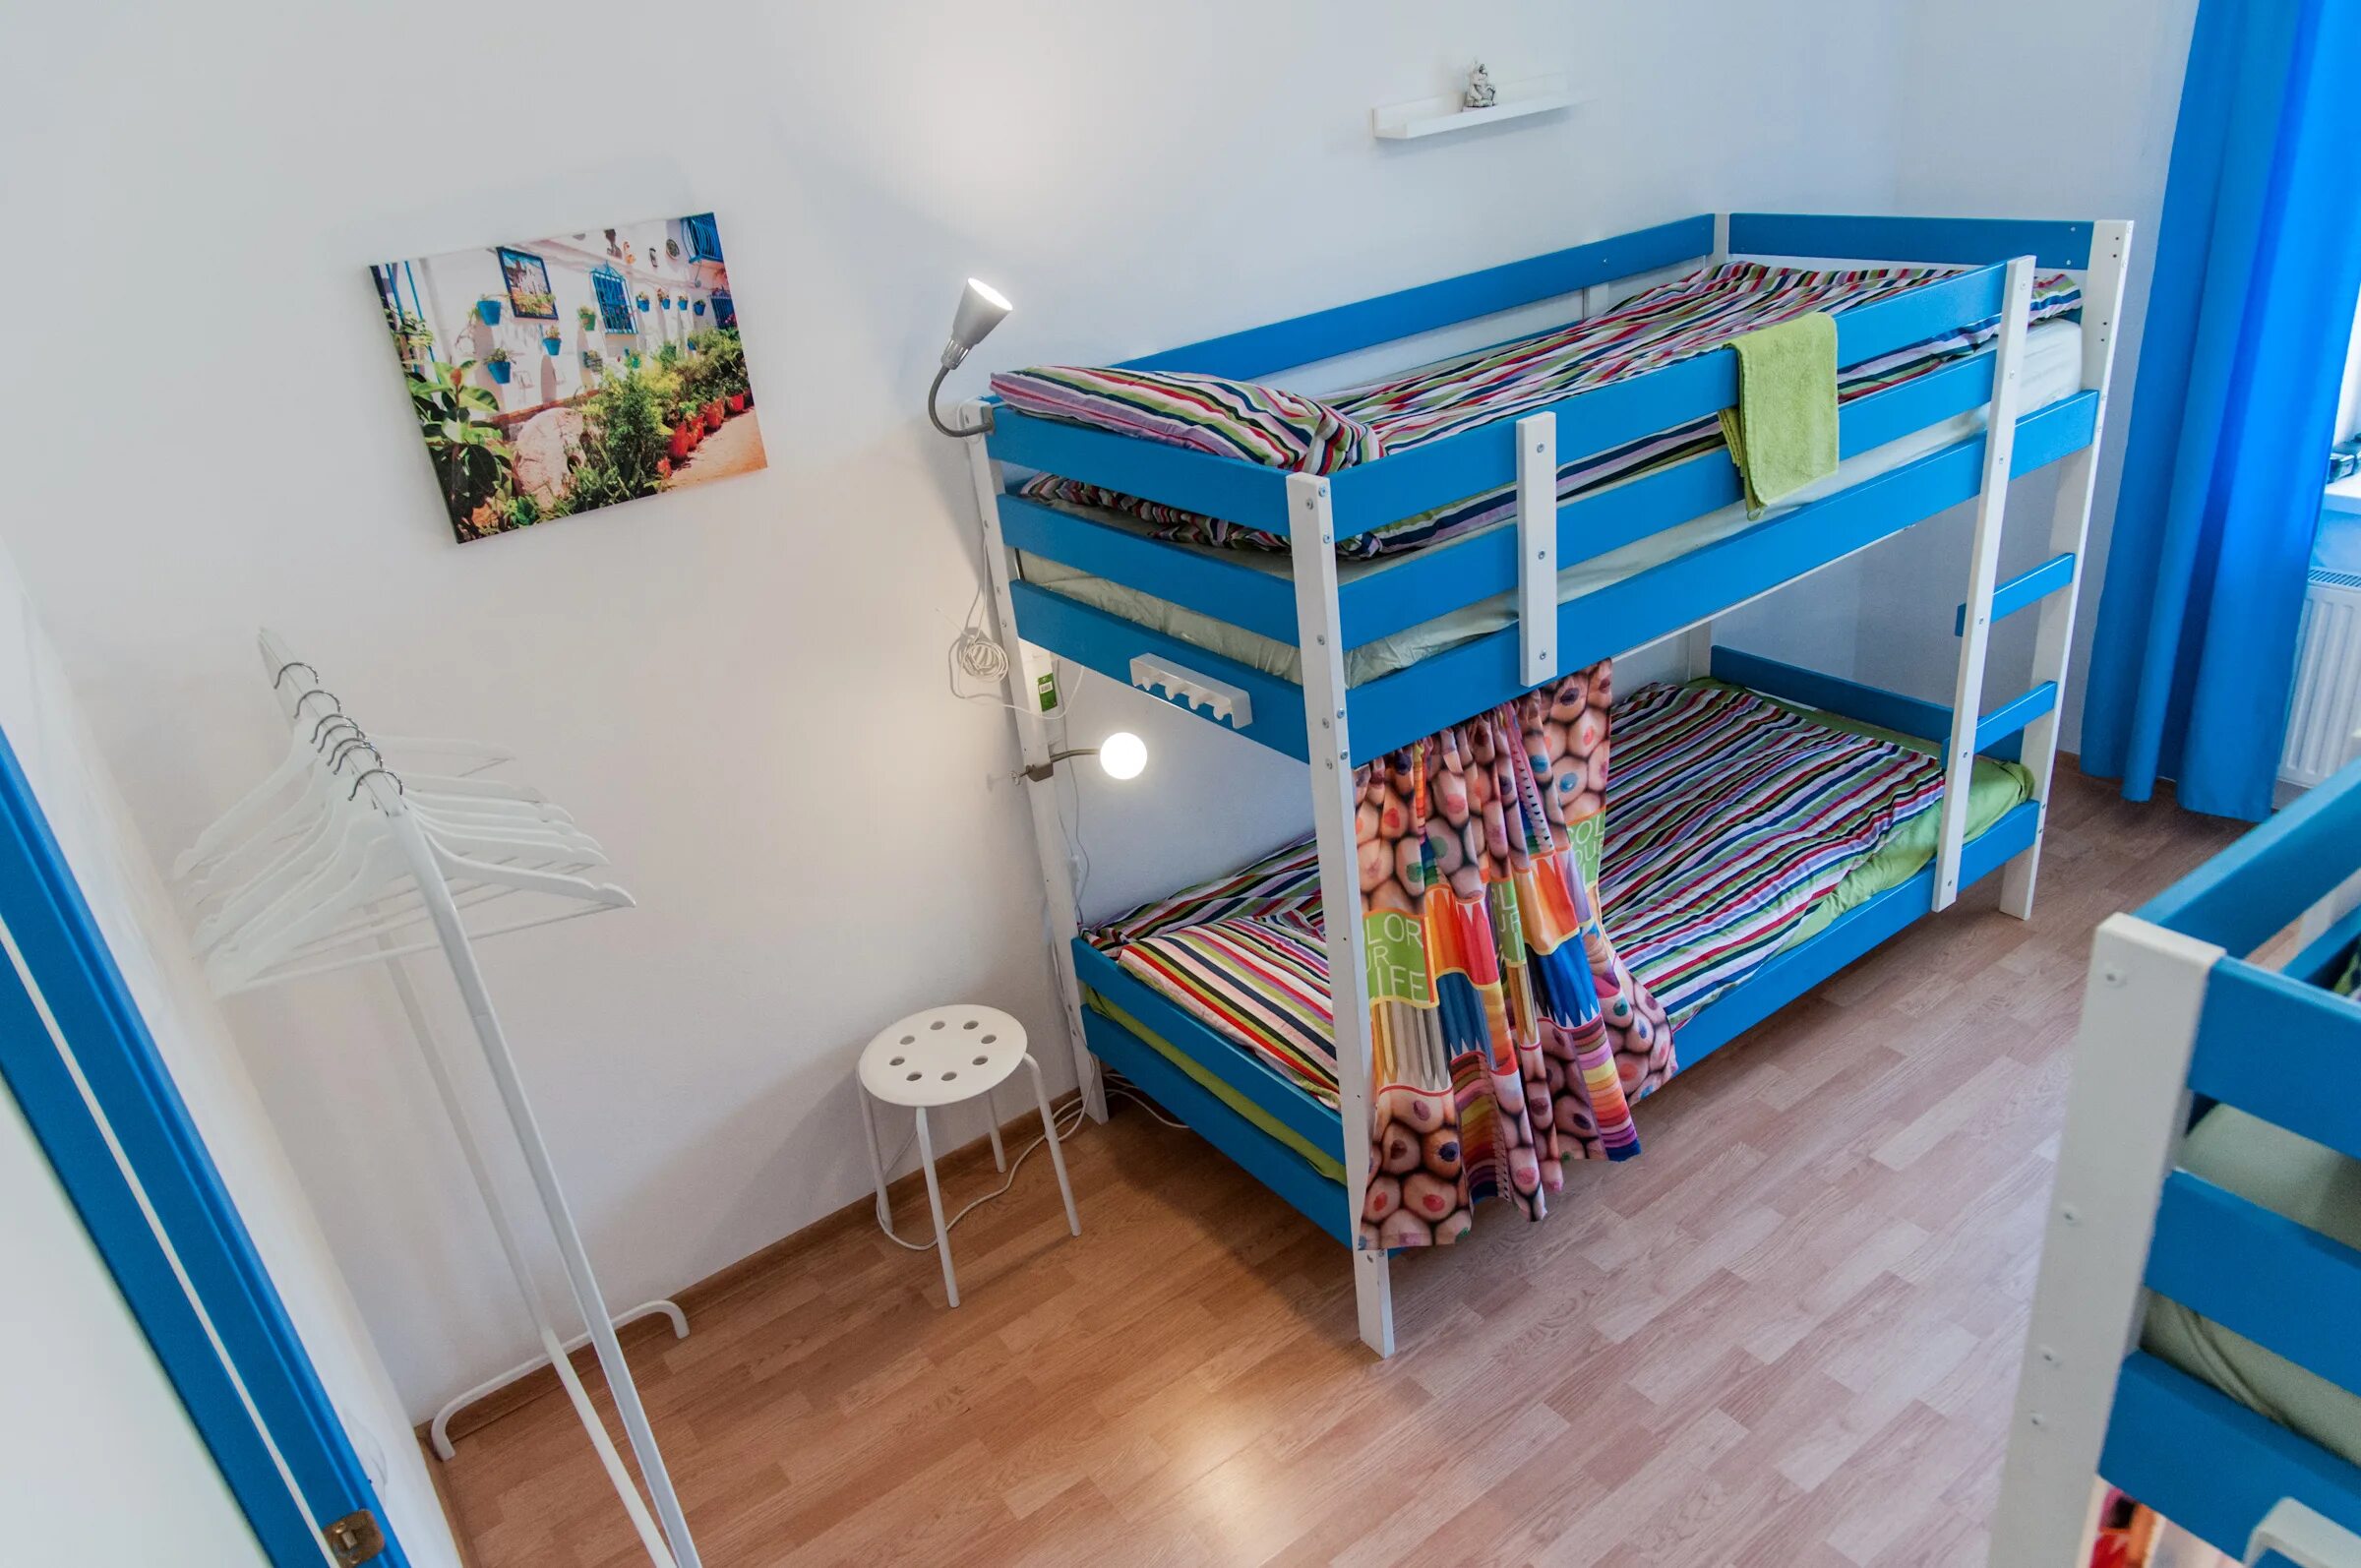 Хостел на сутки екатеринбург. Nice Days Hostel Екатеринбург. Хостел 4 кровати в комнате. Синяя комната хостела. Фото комнат хостела.